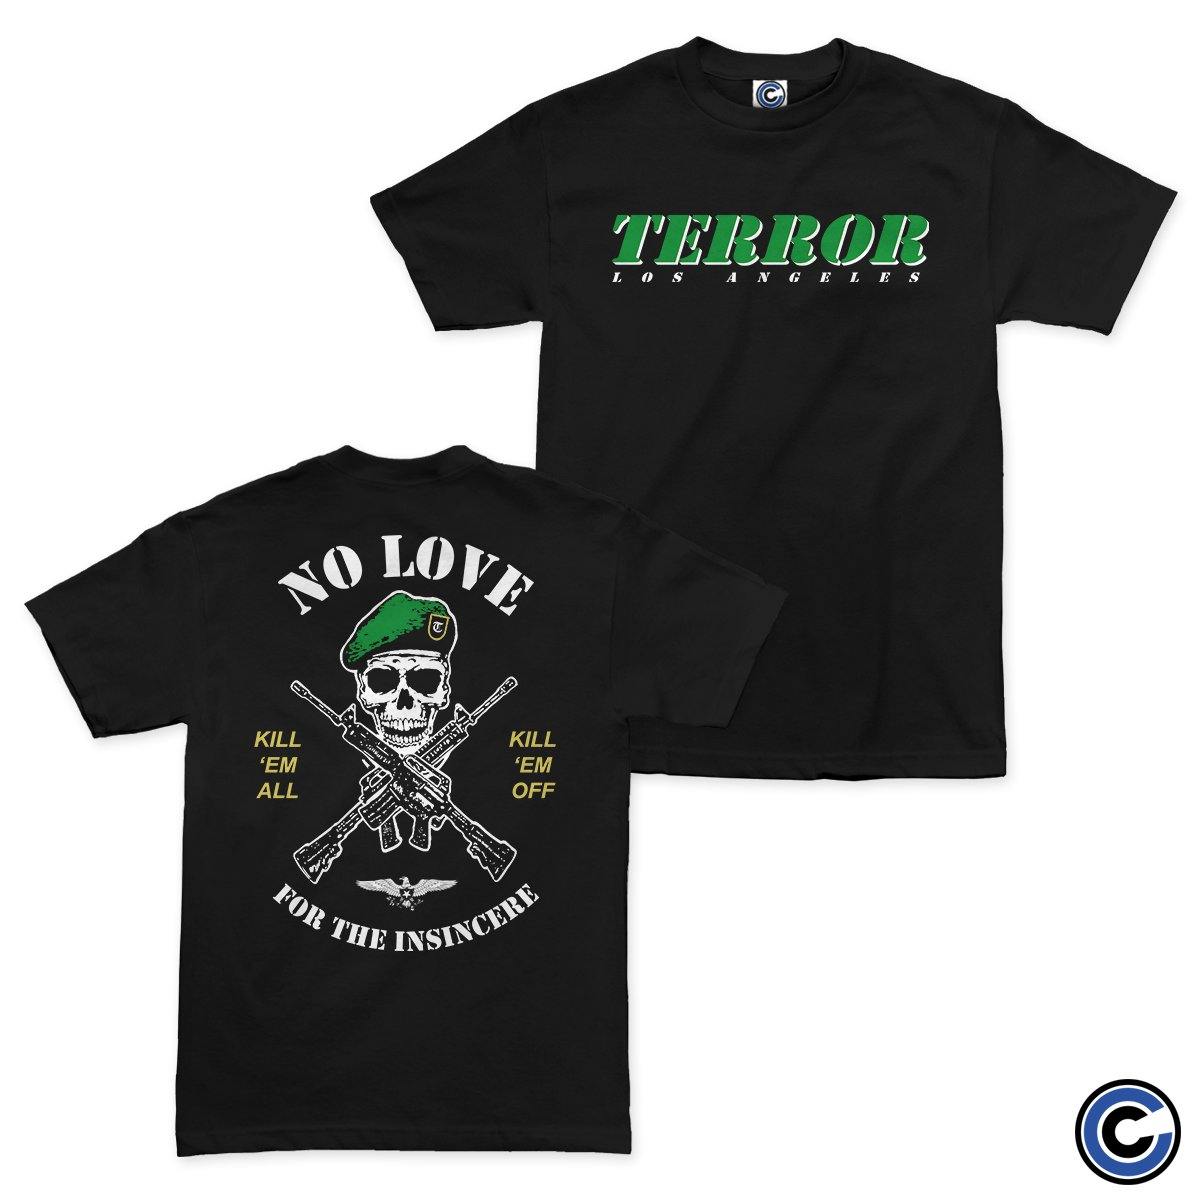 Buy – Terror "No Allies" Shirt – Band & Music Merch – Cold Cuts Merch